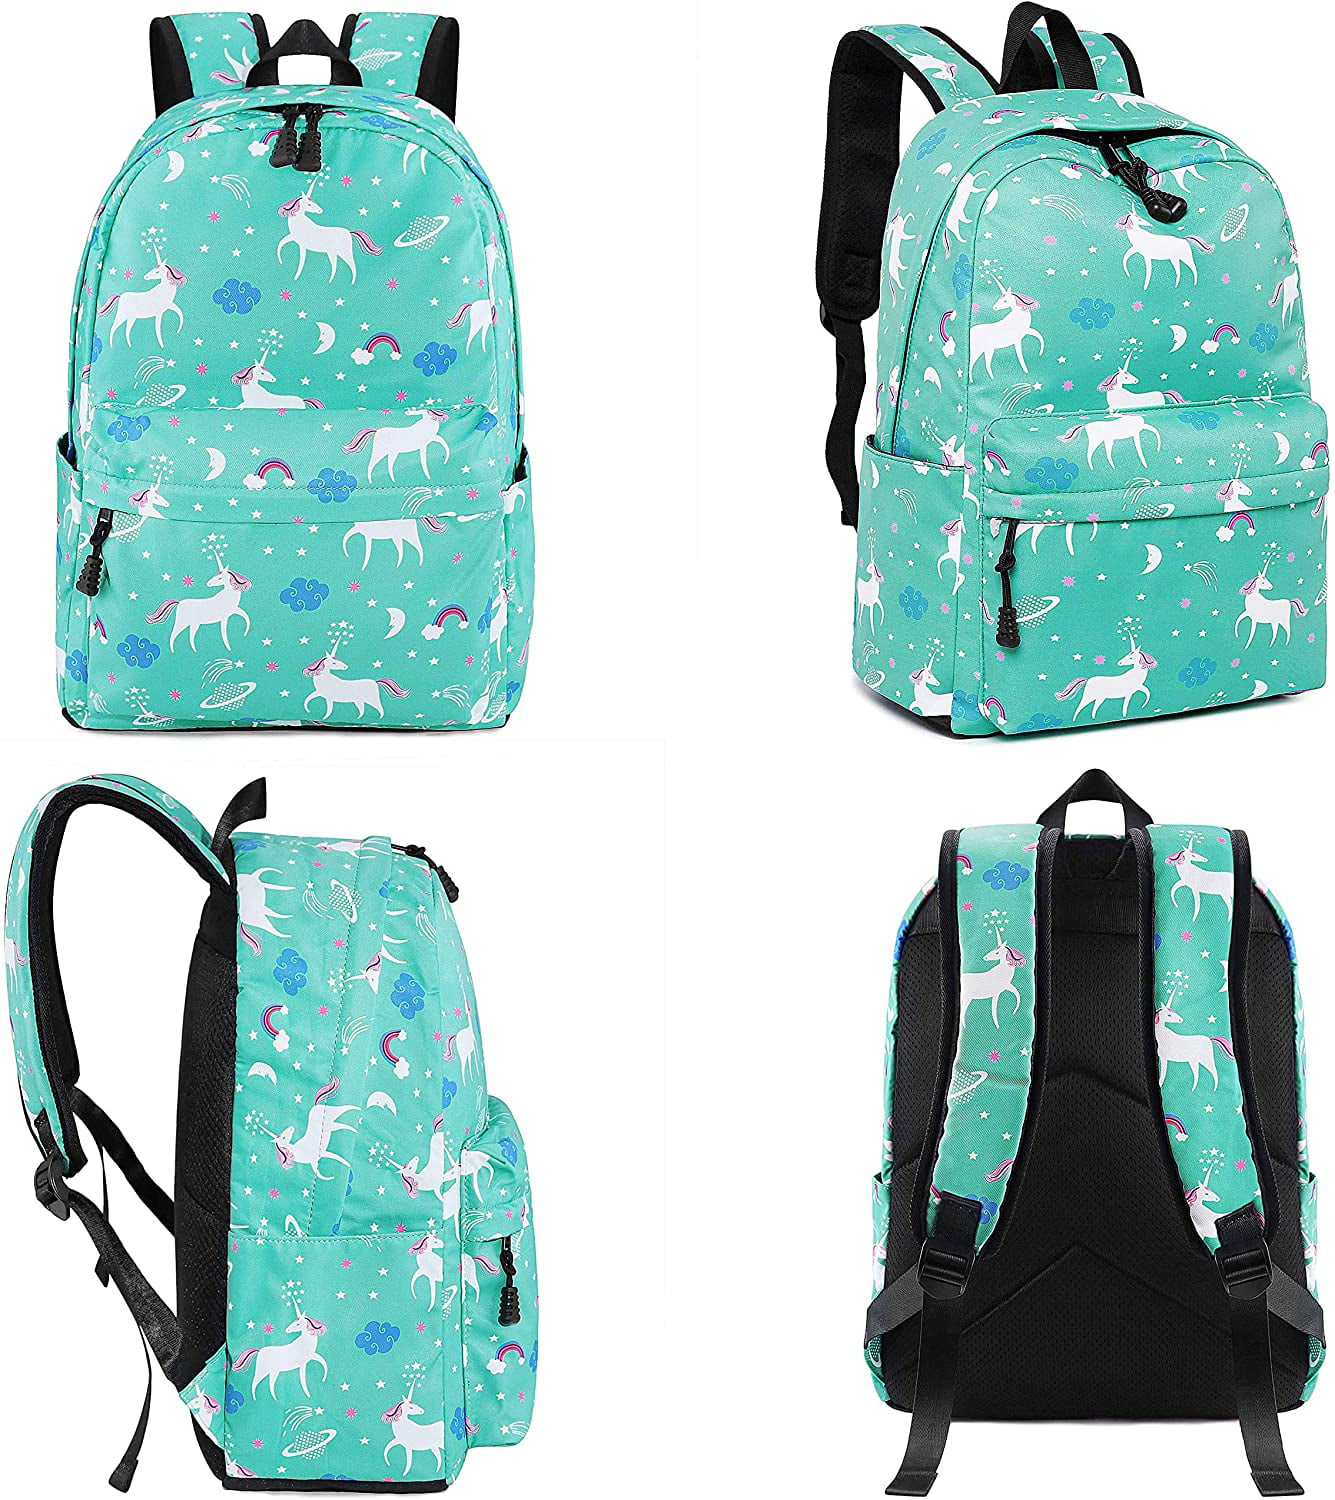 Xinveen Waterproof School Backpack Soft Lightweight Laptop Backpack Rucksack Casual Bookbag for Women Girls Travel Outdoor 